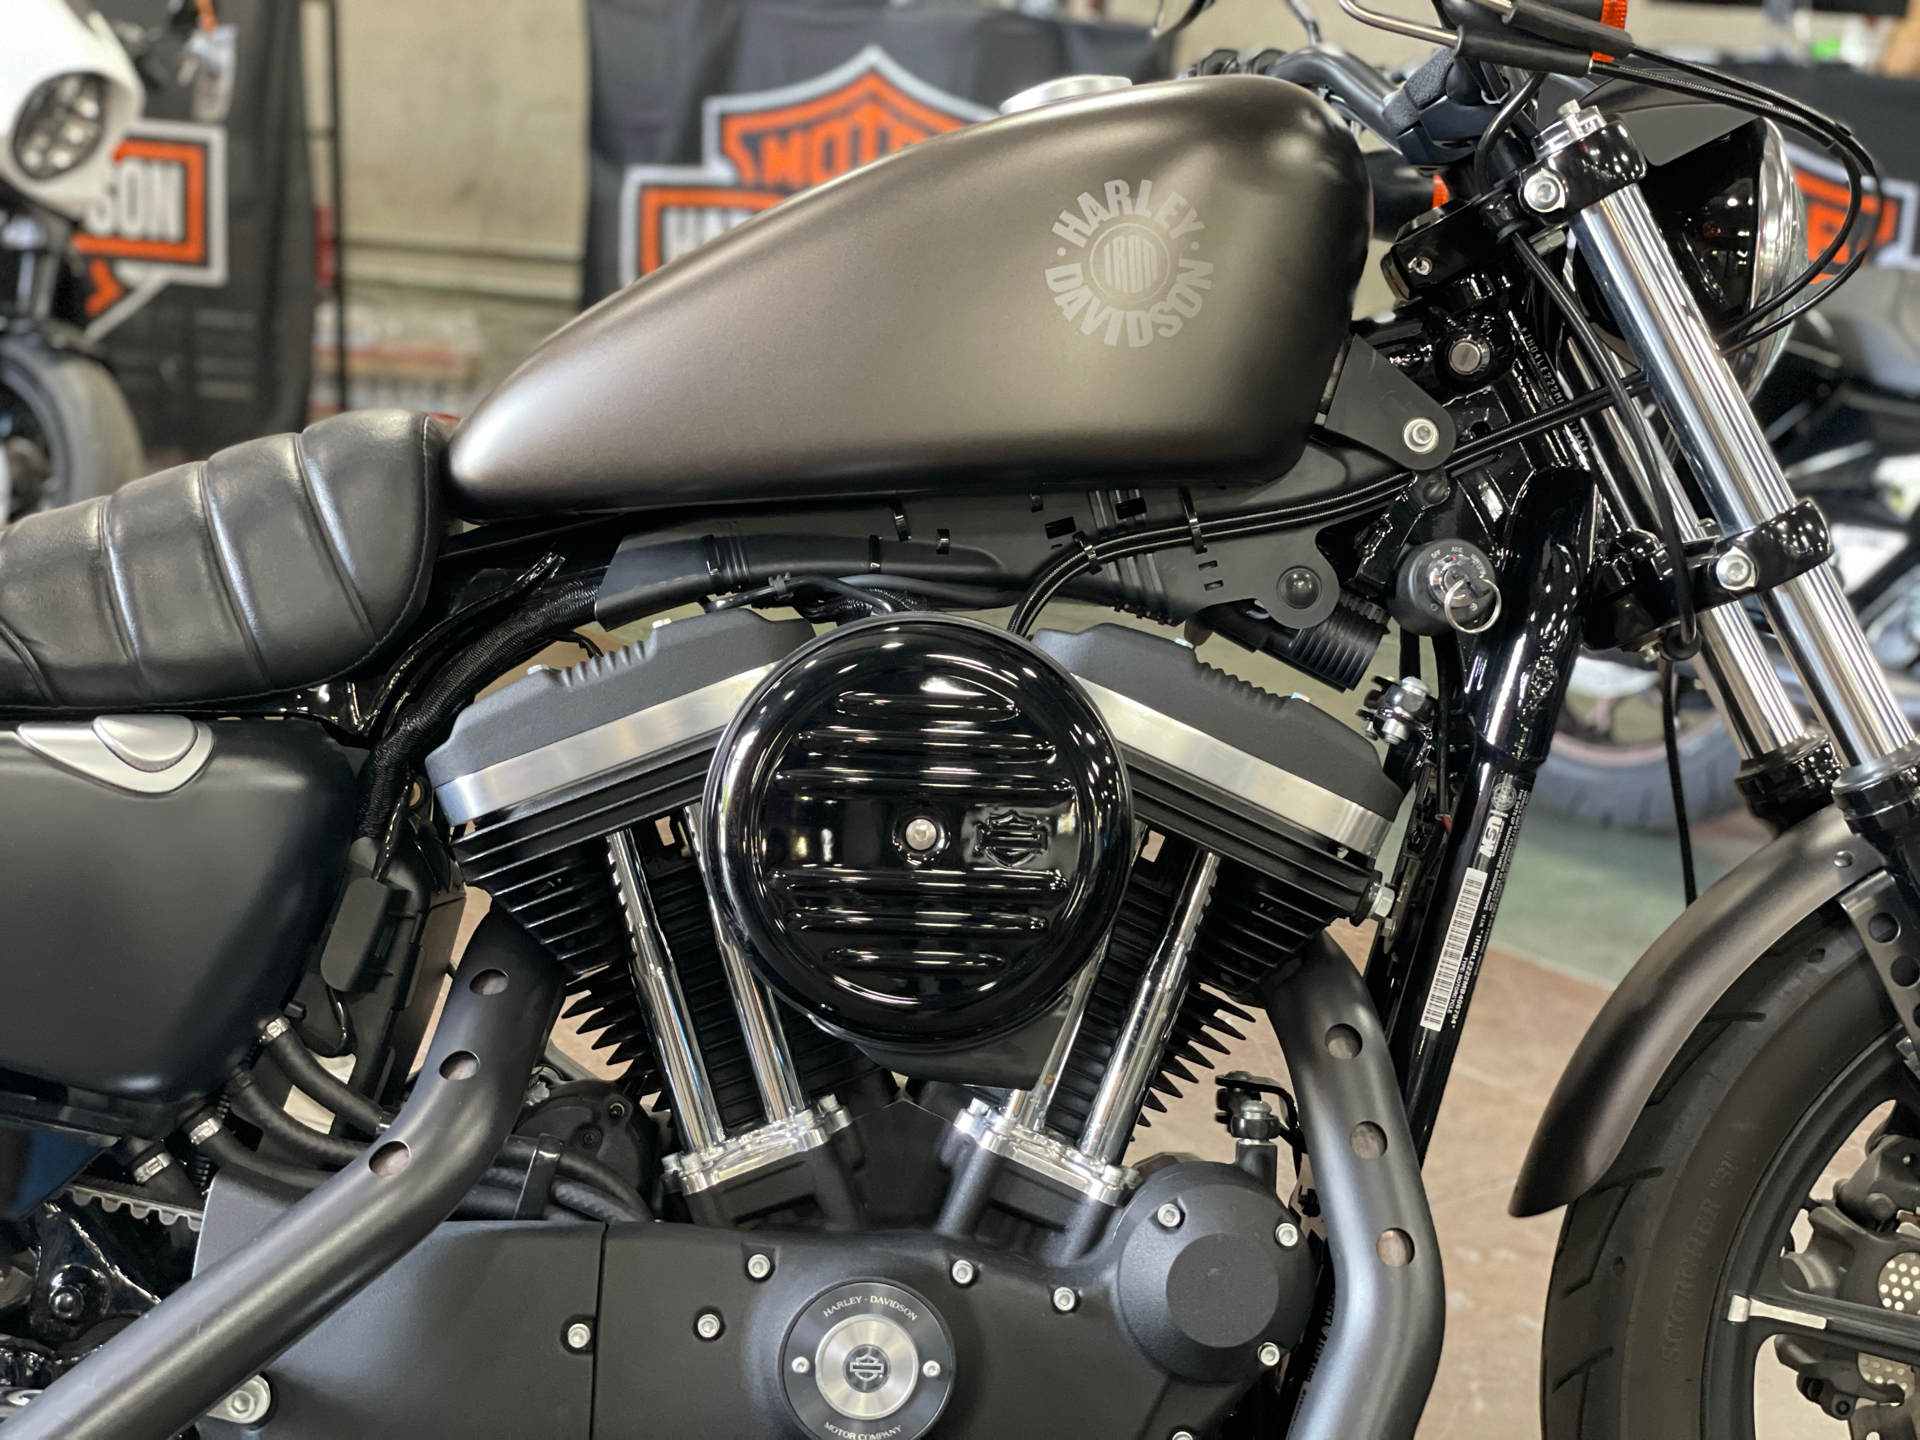 2021 Harley-Davidson Iron 883™ in San Jose, California - Photo 2